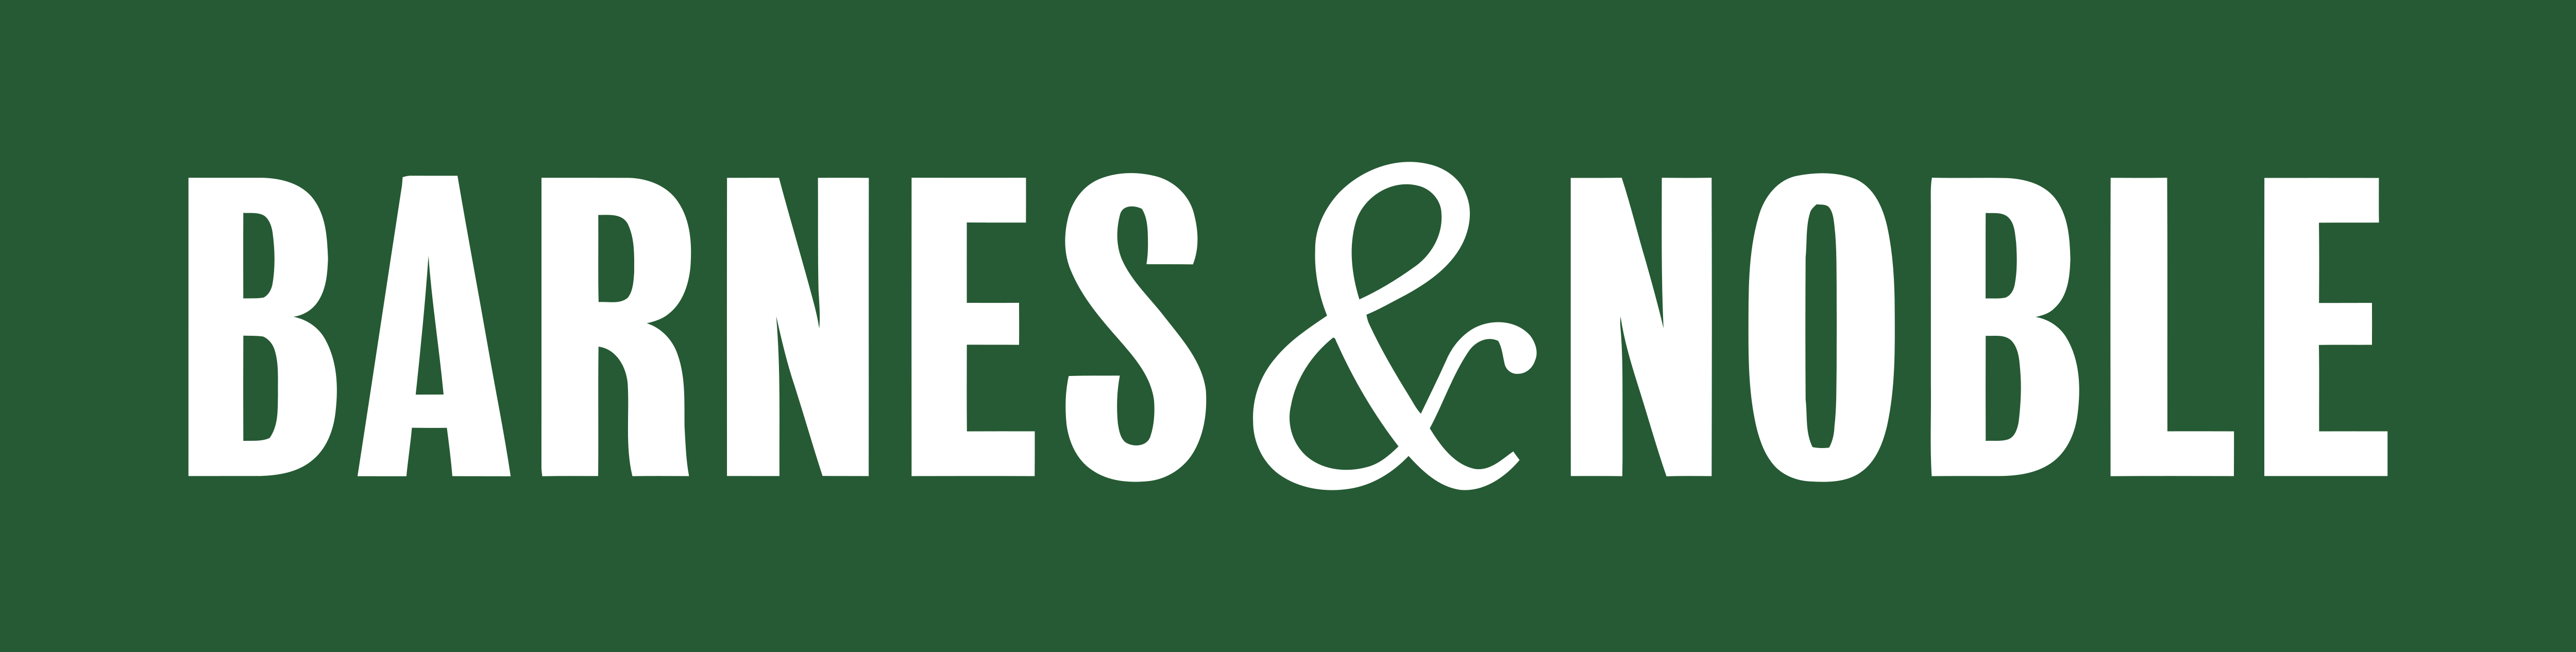 Barnes & Noble Logos Download